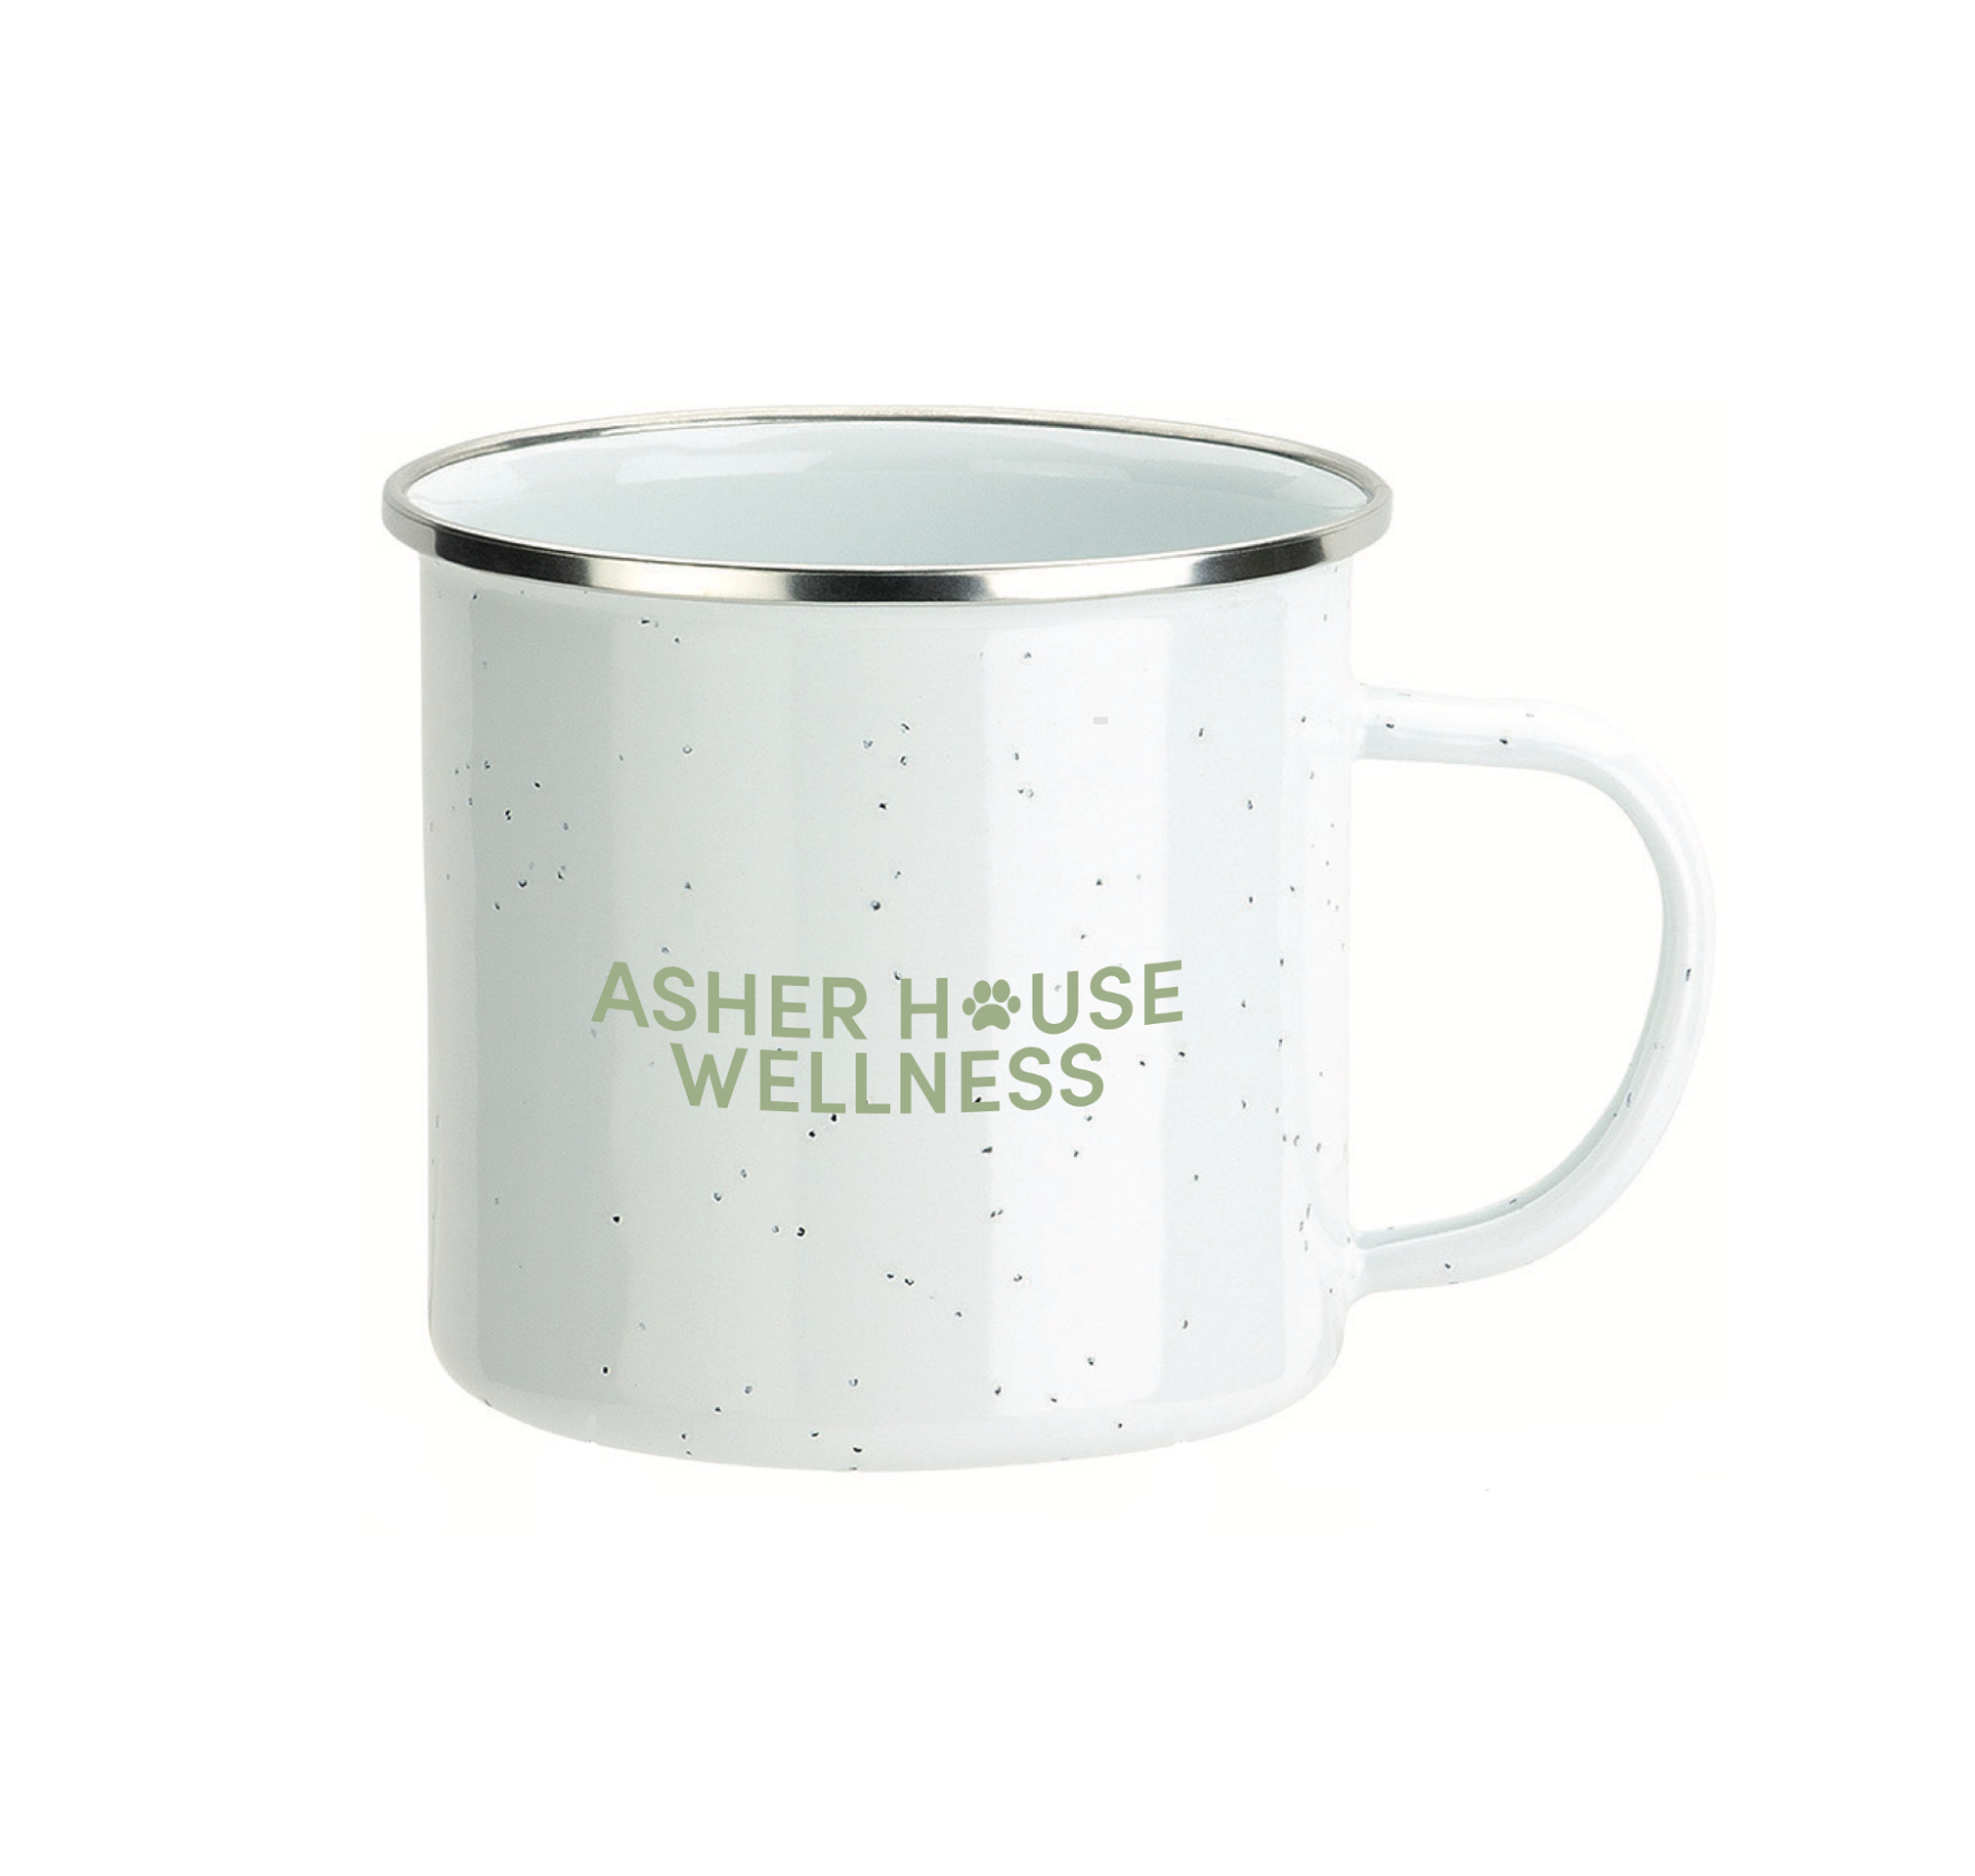 ¡NUEVO! Taza de café esmaltada Asher House Wellness de 16 oz